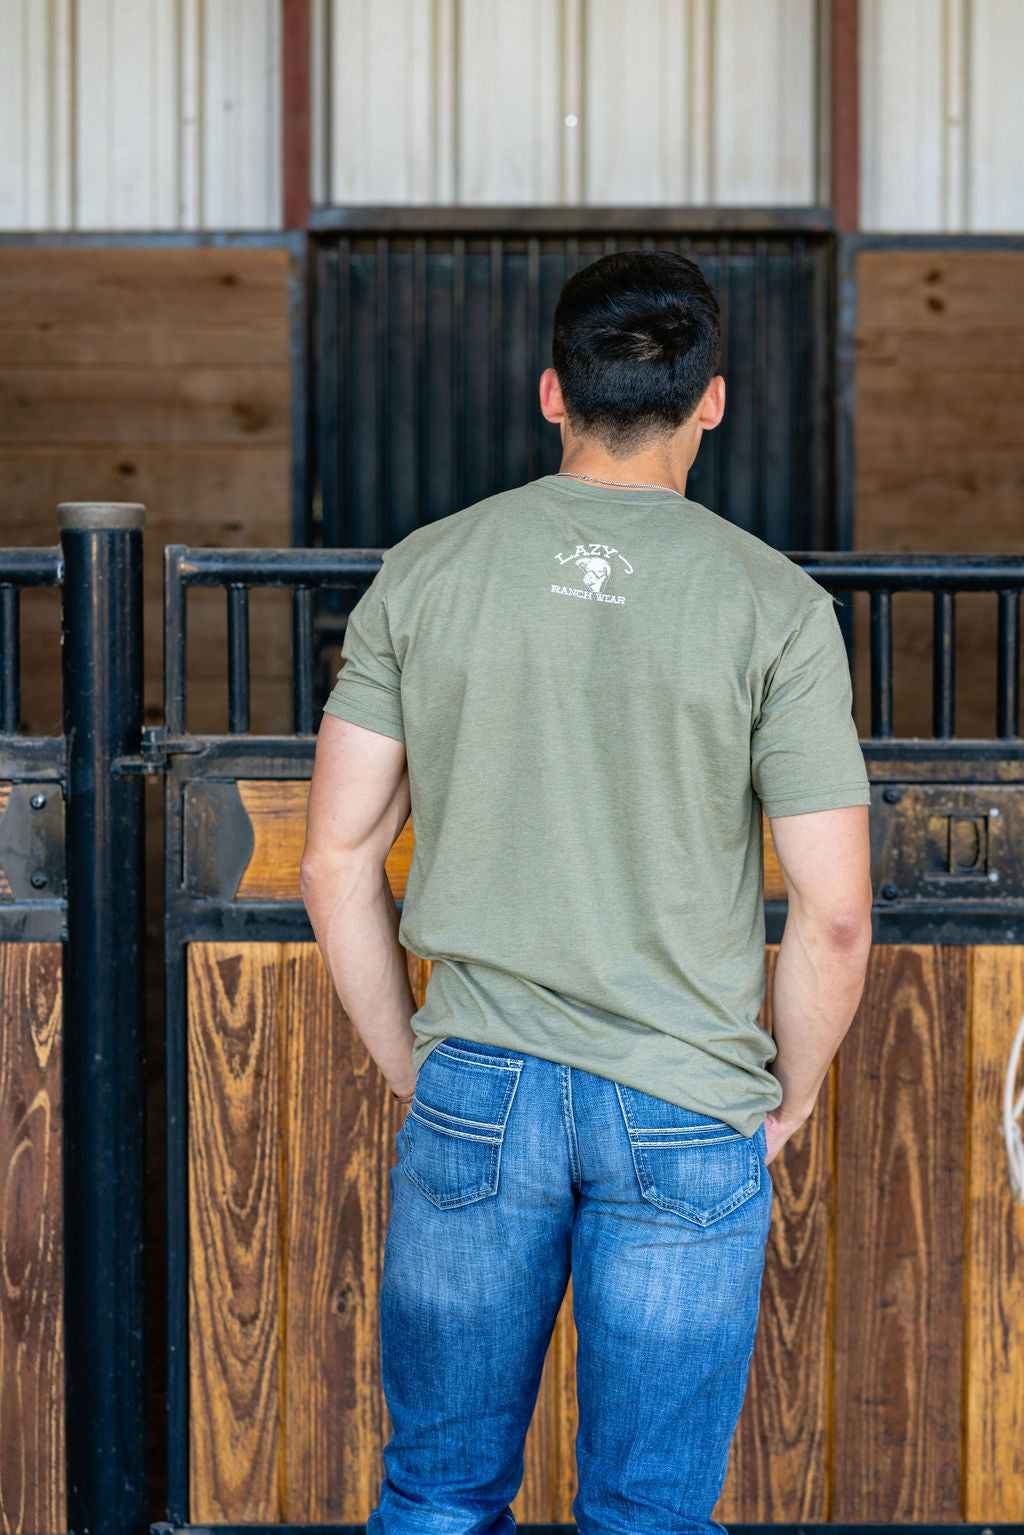 Lazy J Ranch Wear Mexico Elevation Short Sleeve T-Shirt - Olive